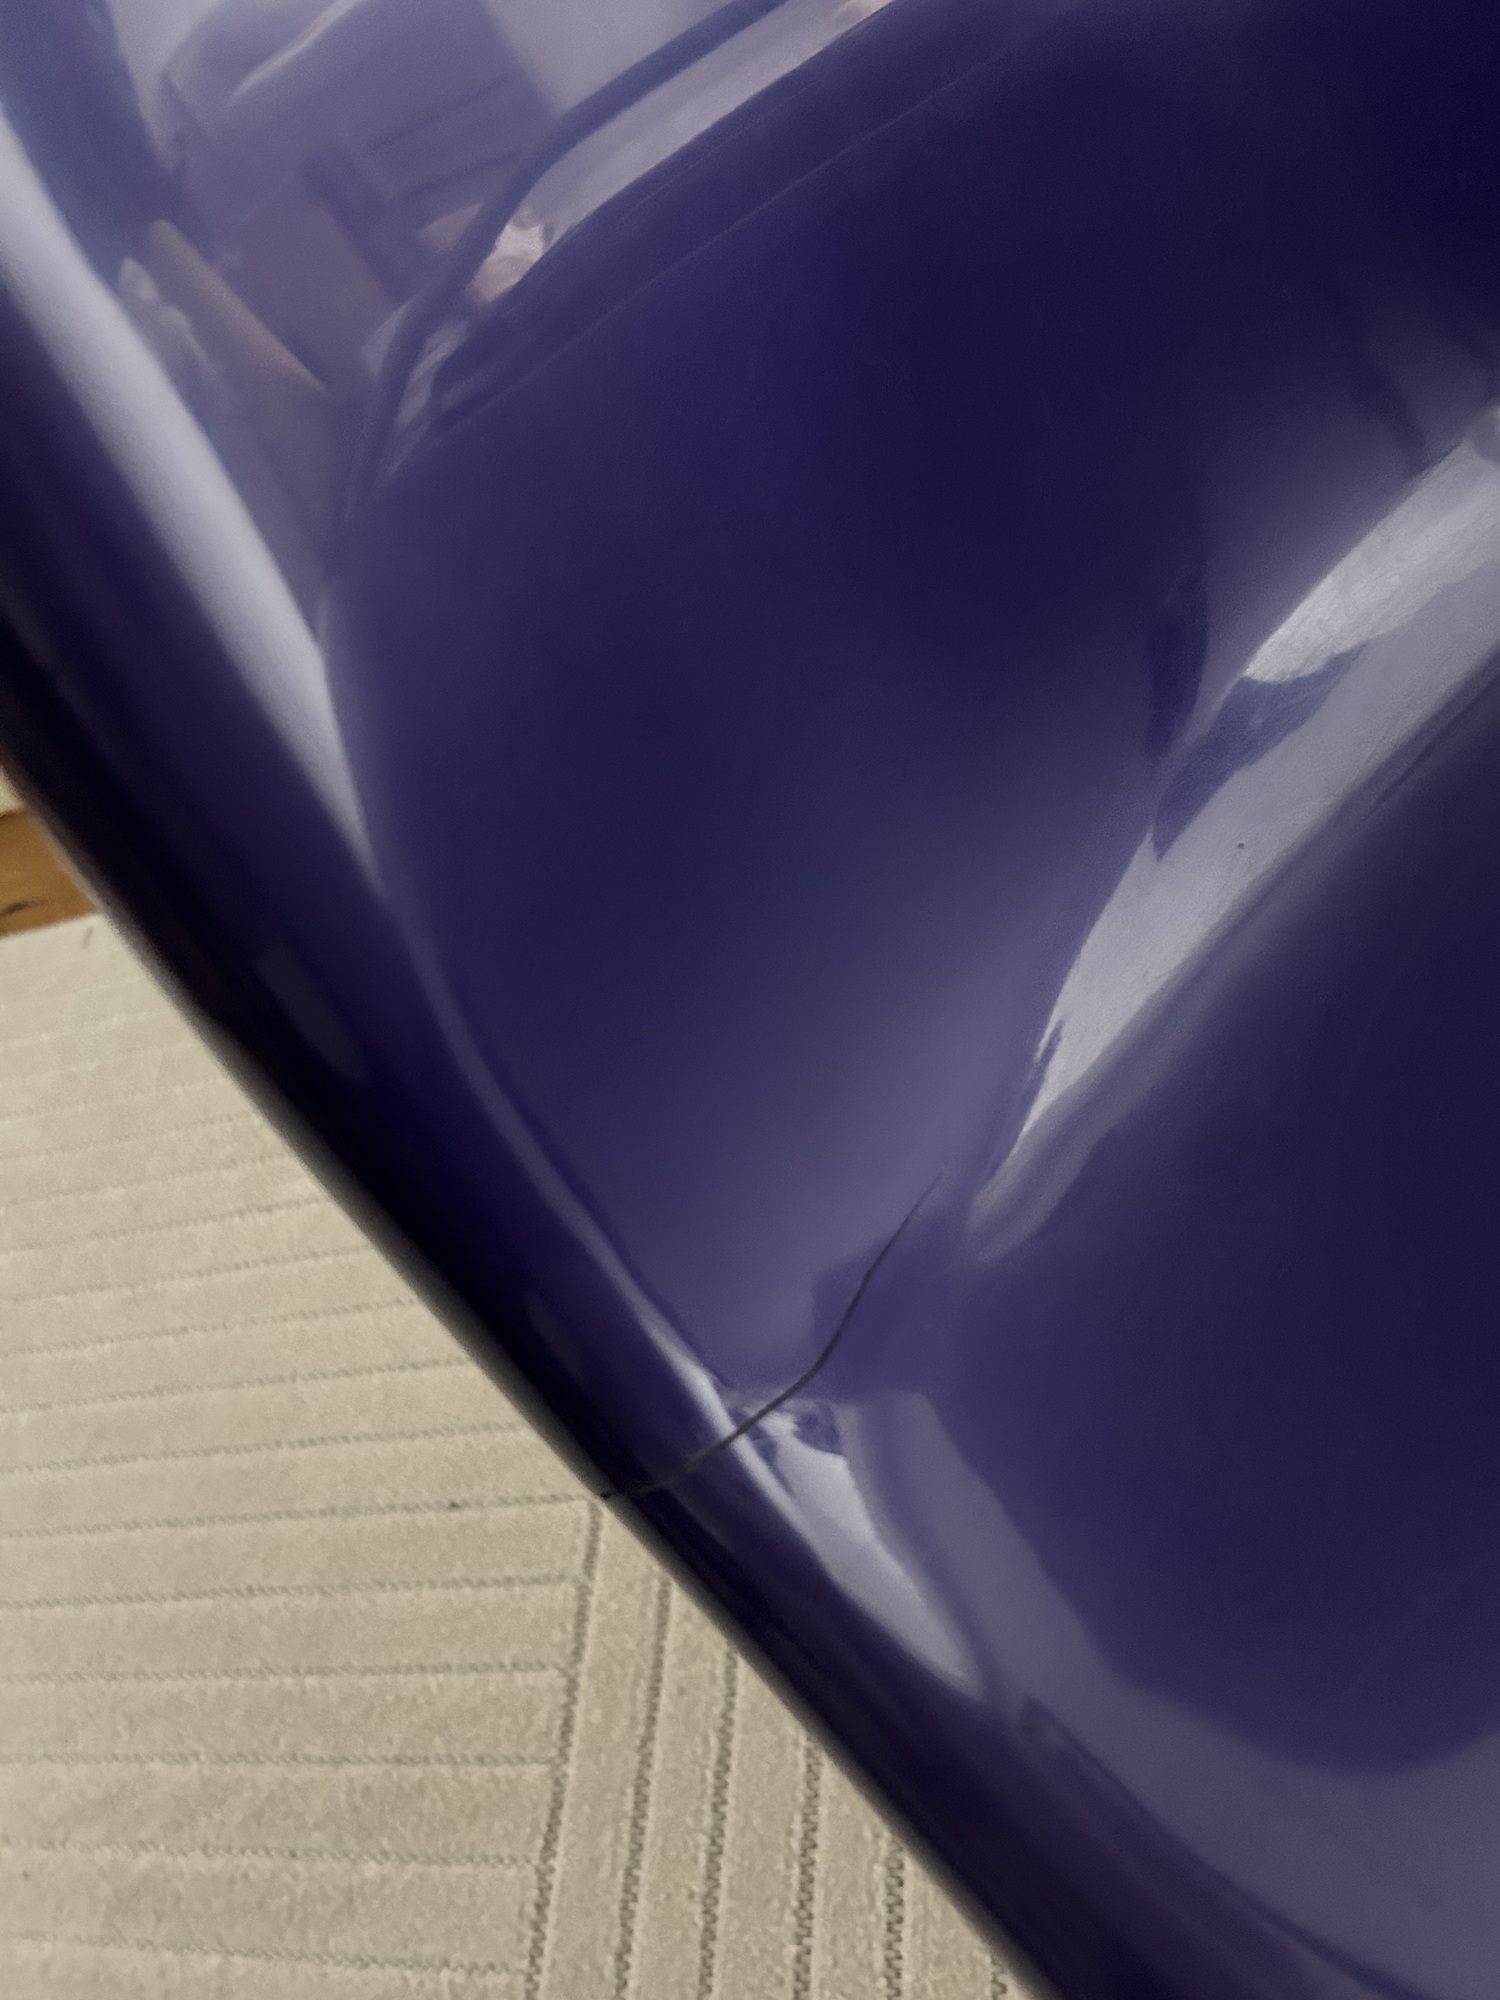 2x Panton Chair Kunststoff Violett 4